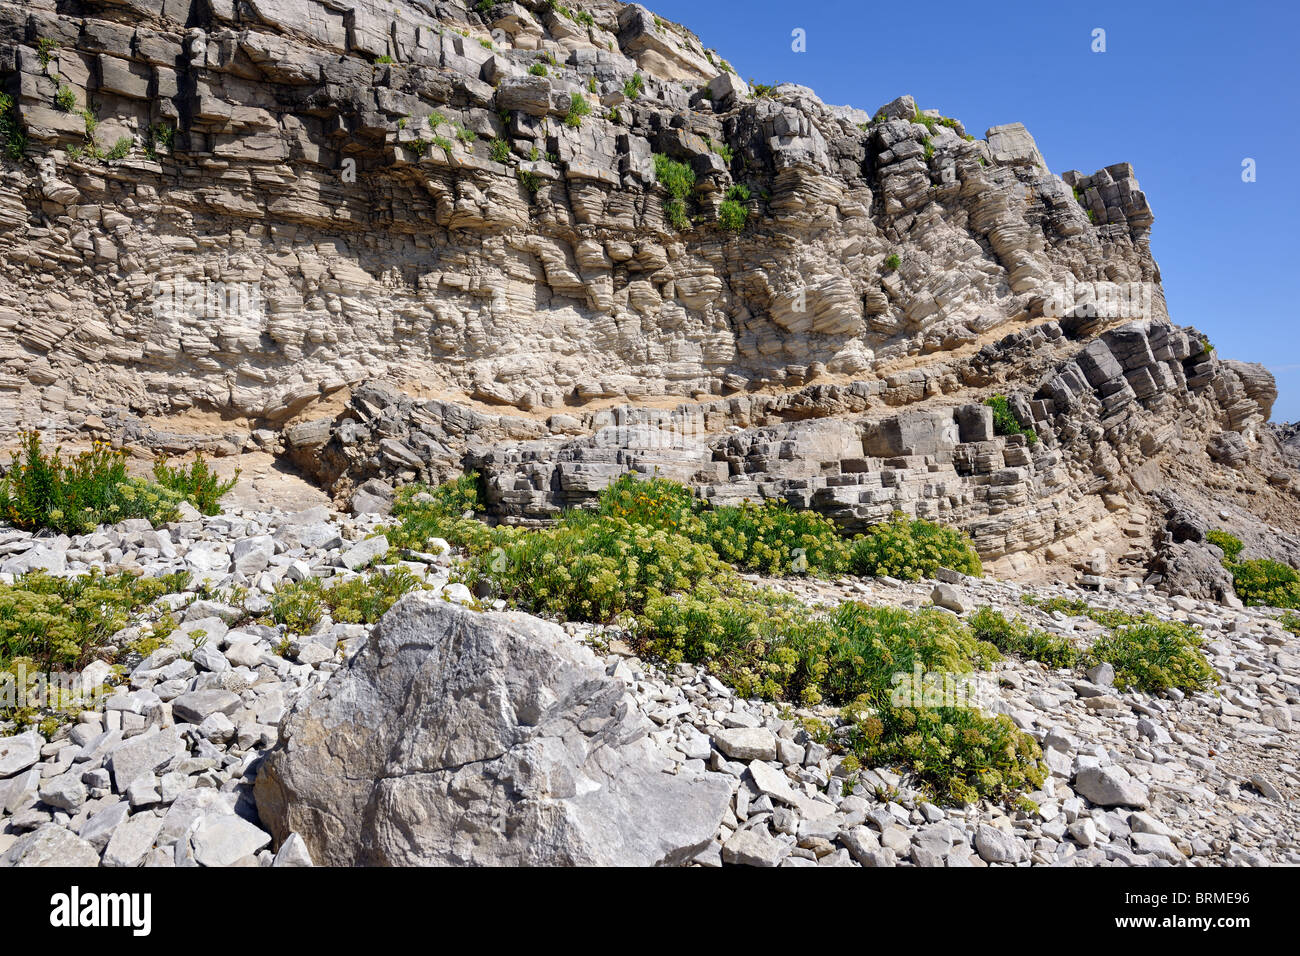 Rock and Golden Samphire colonizing limestone scree, Fossil Forest Ledge, Dorset, England Stock Photo